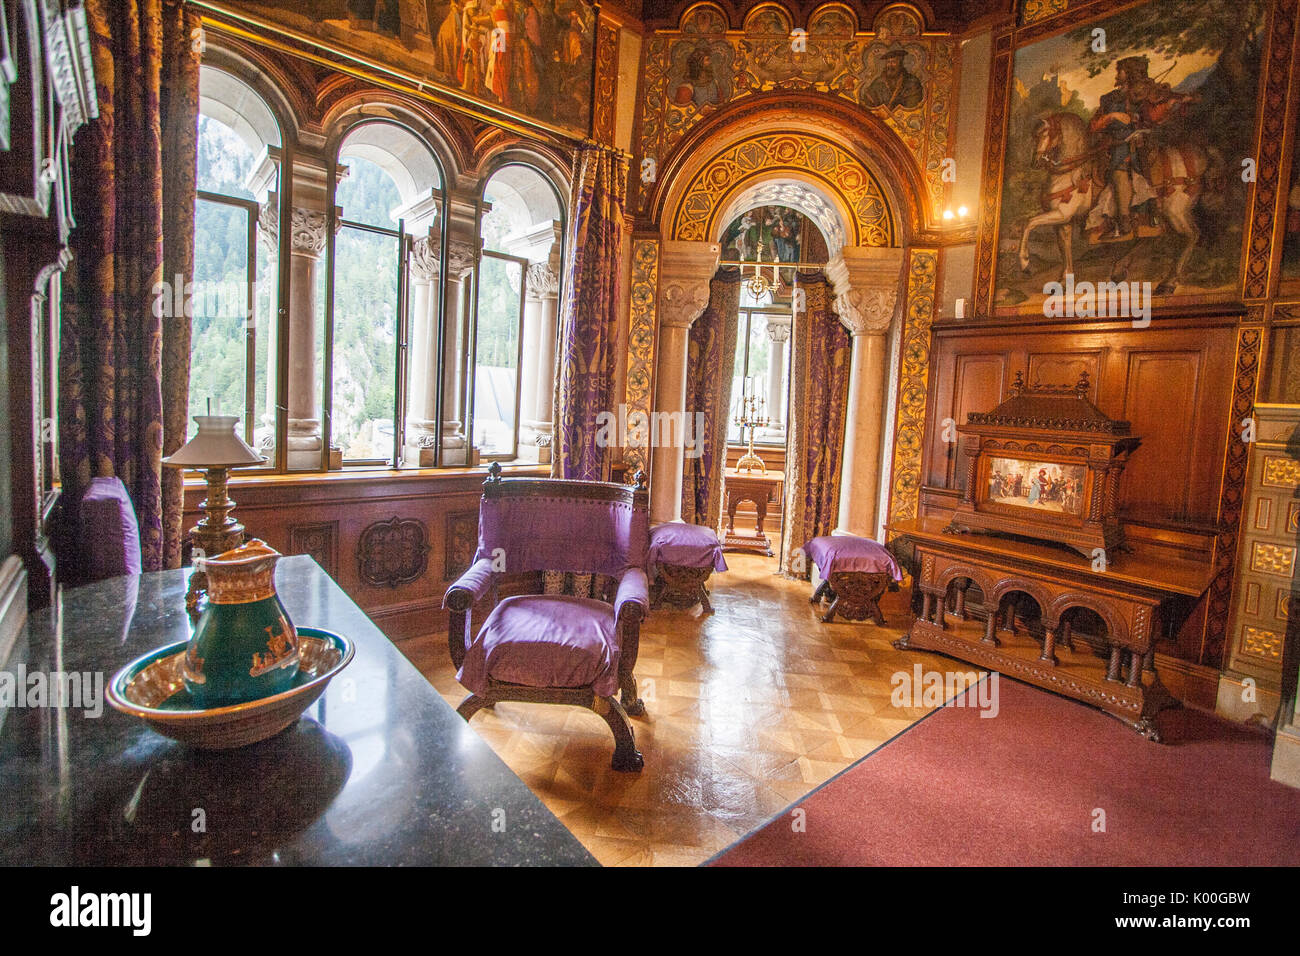 Interior of Neuschwanstein castle Fussen Bavaria southern Germany Europe  Stock Photo - Alamy